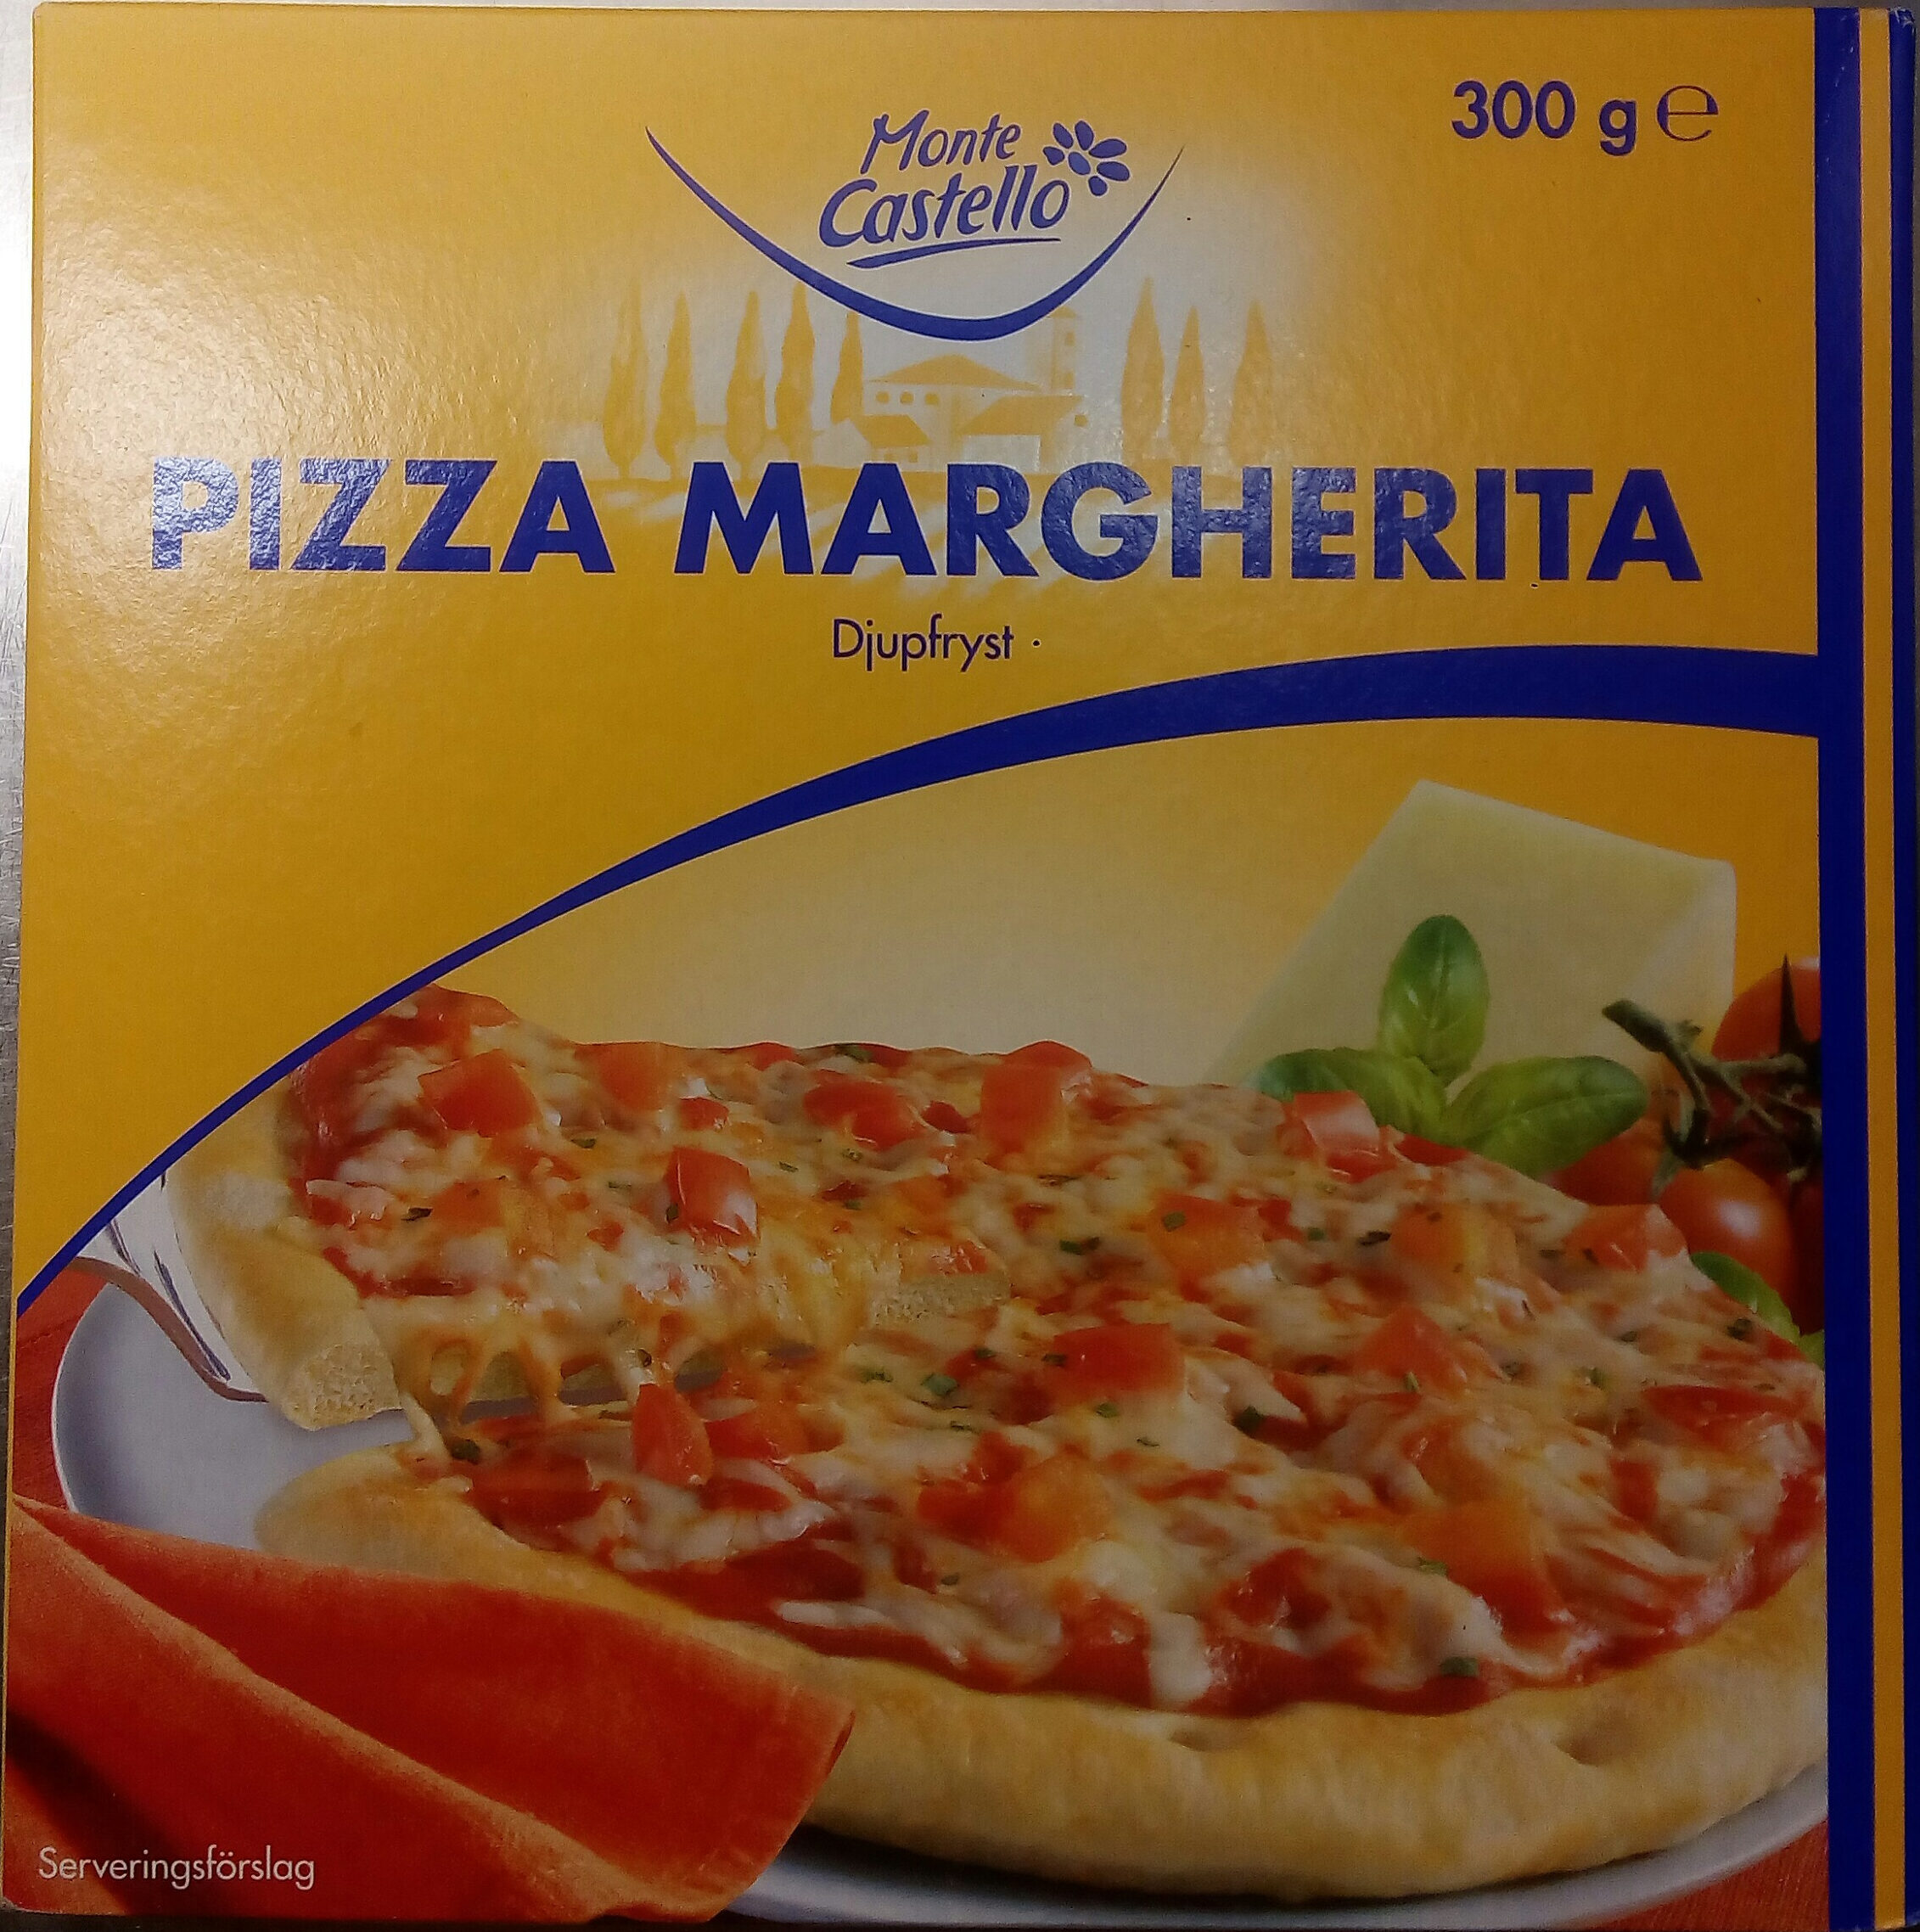 Monte Castello Pizza Margherita - Produkt - sv